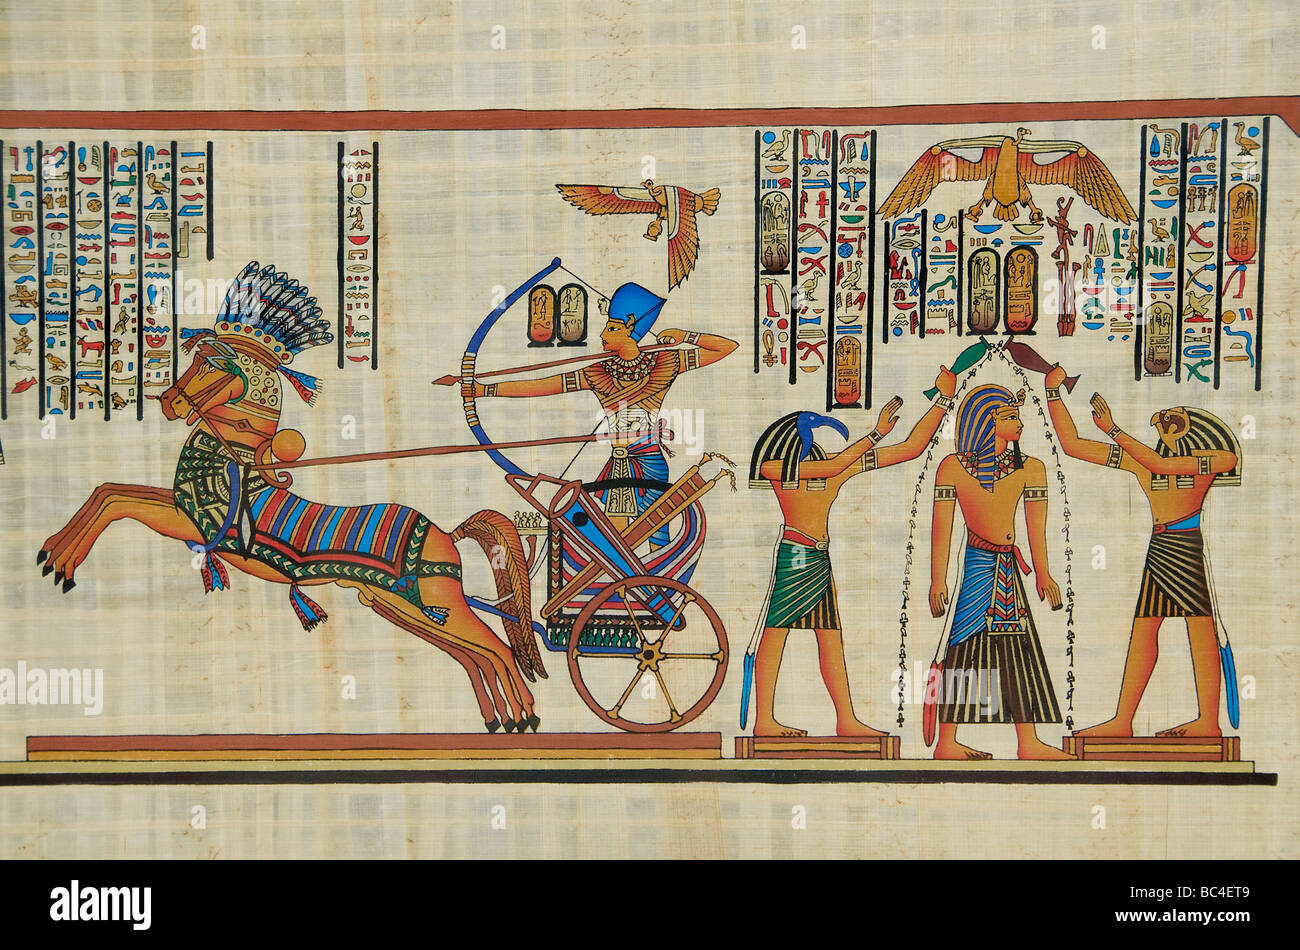 Pintura egipcia en papiro fotografías e imágenes de alta resolución - Alamy